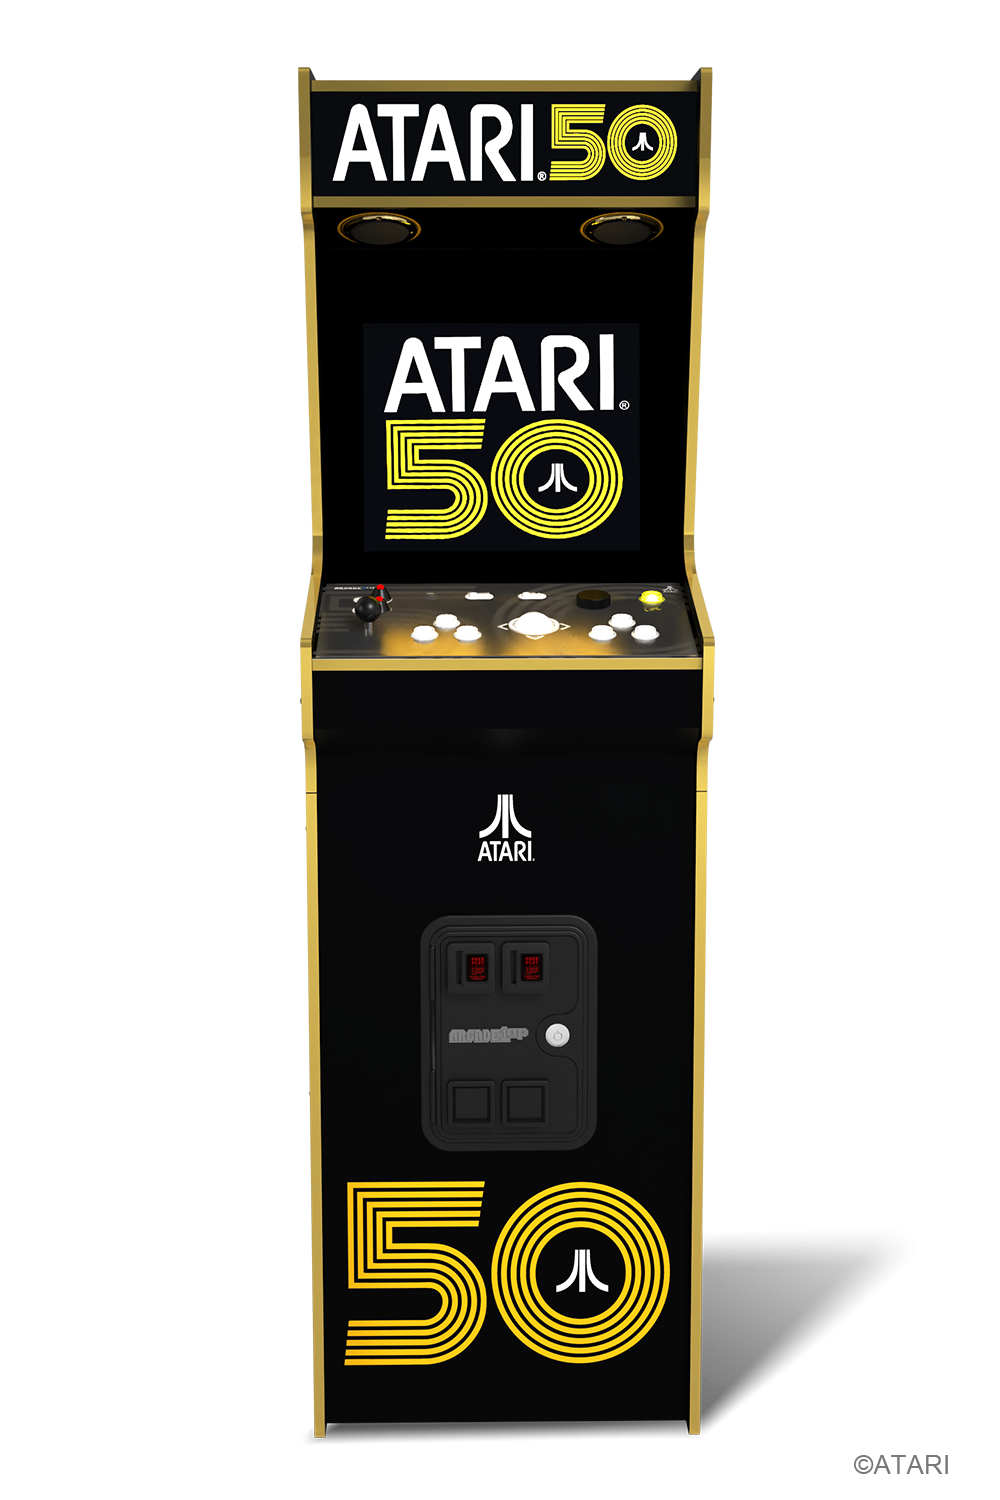 ARCADE 1 UP ATARI 50TH ANNIVESARY DELUXE ARCADE MACHINE - 50 GAMES IN 1